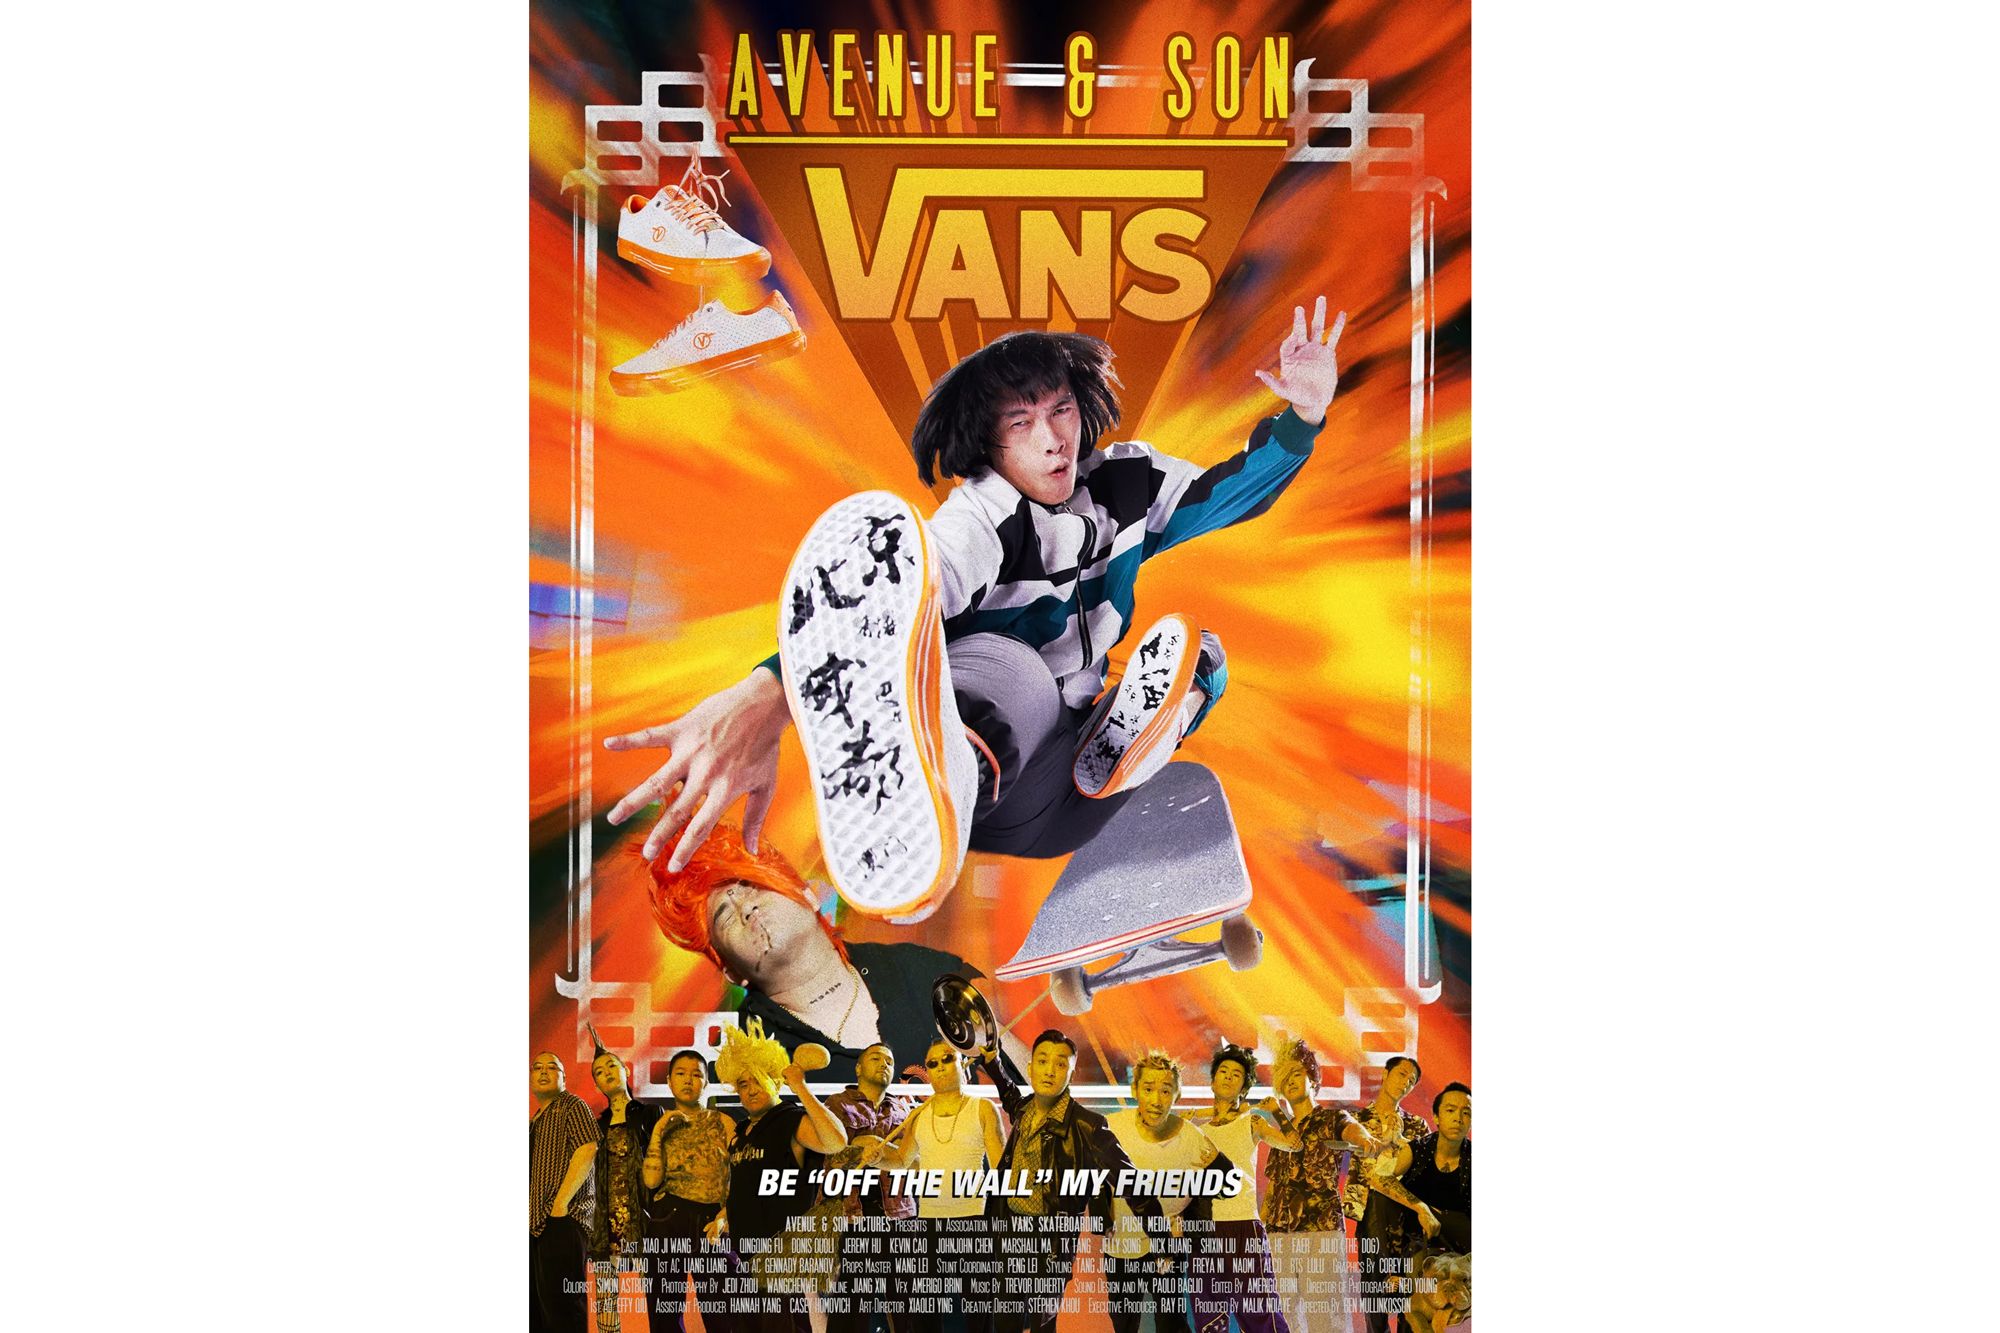 Avenue & Son x Vans Skate Sid